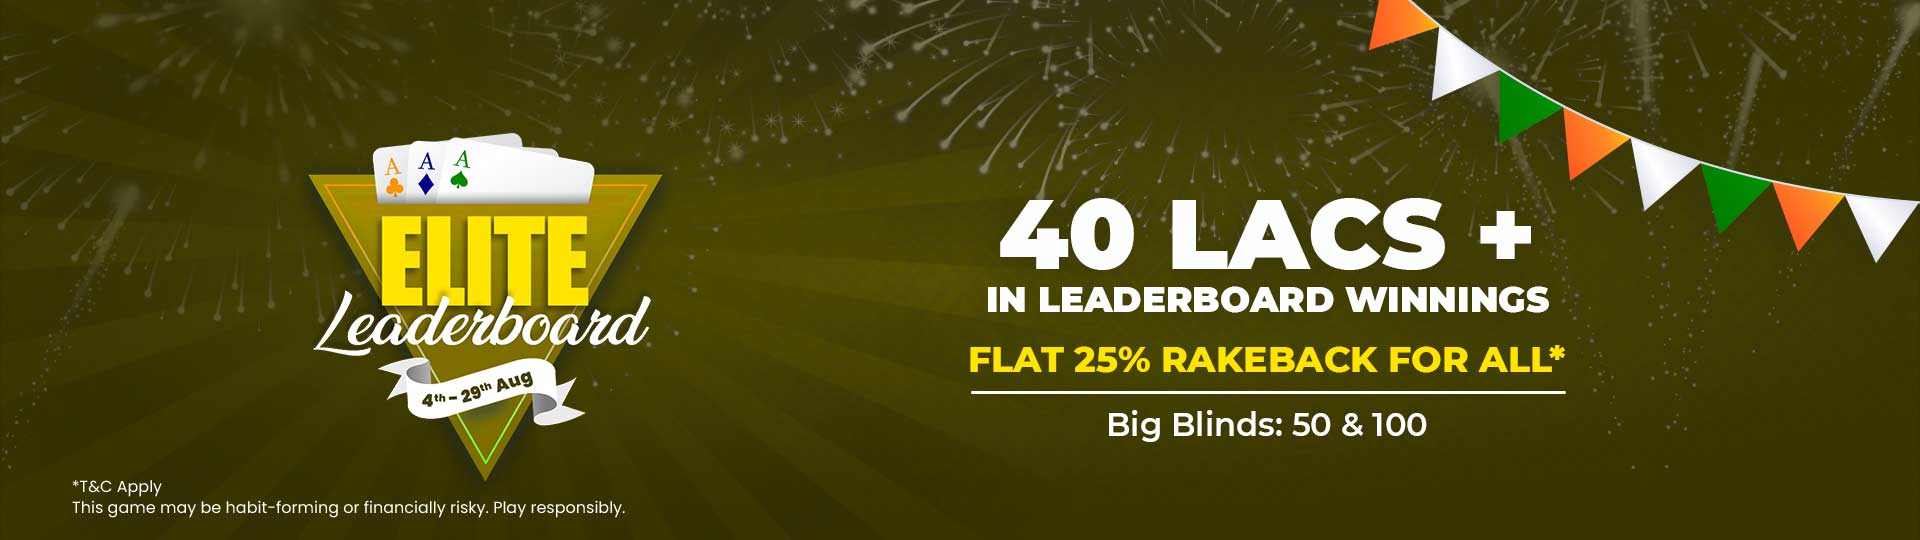 Adda52|Online|Poker|Elite Leaderboards |August